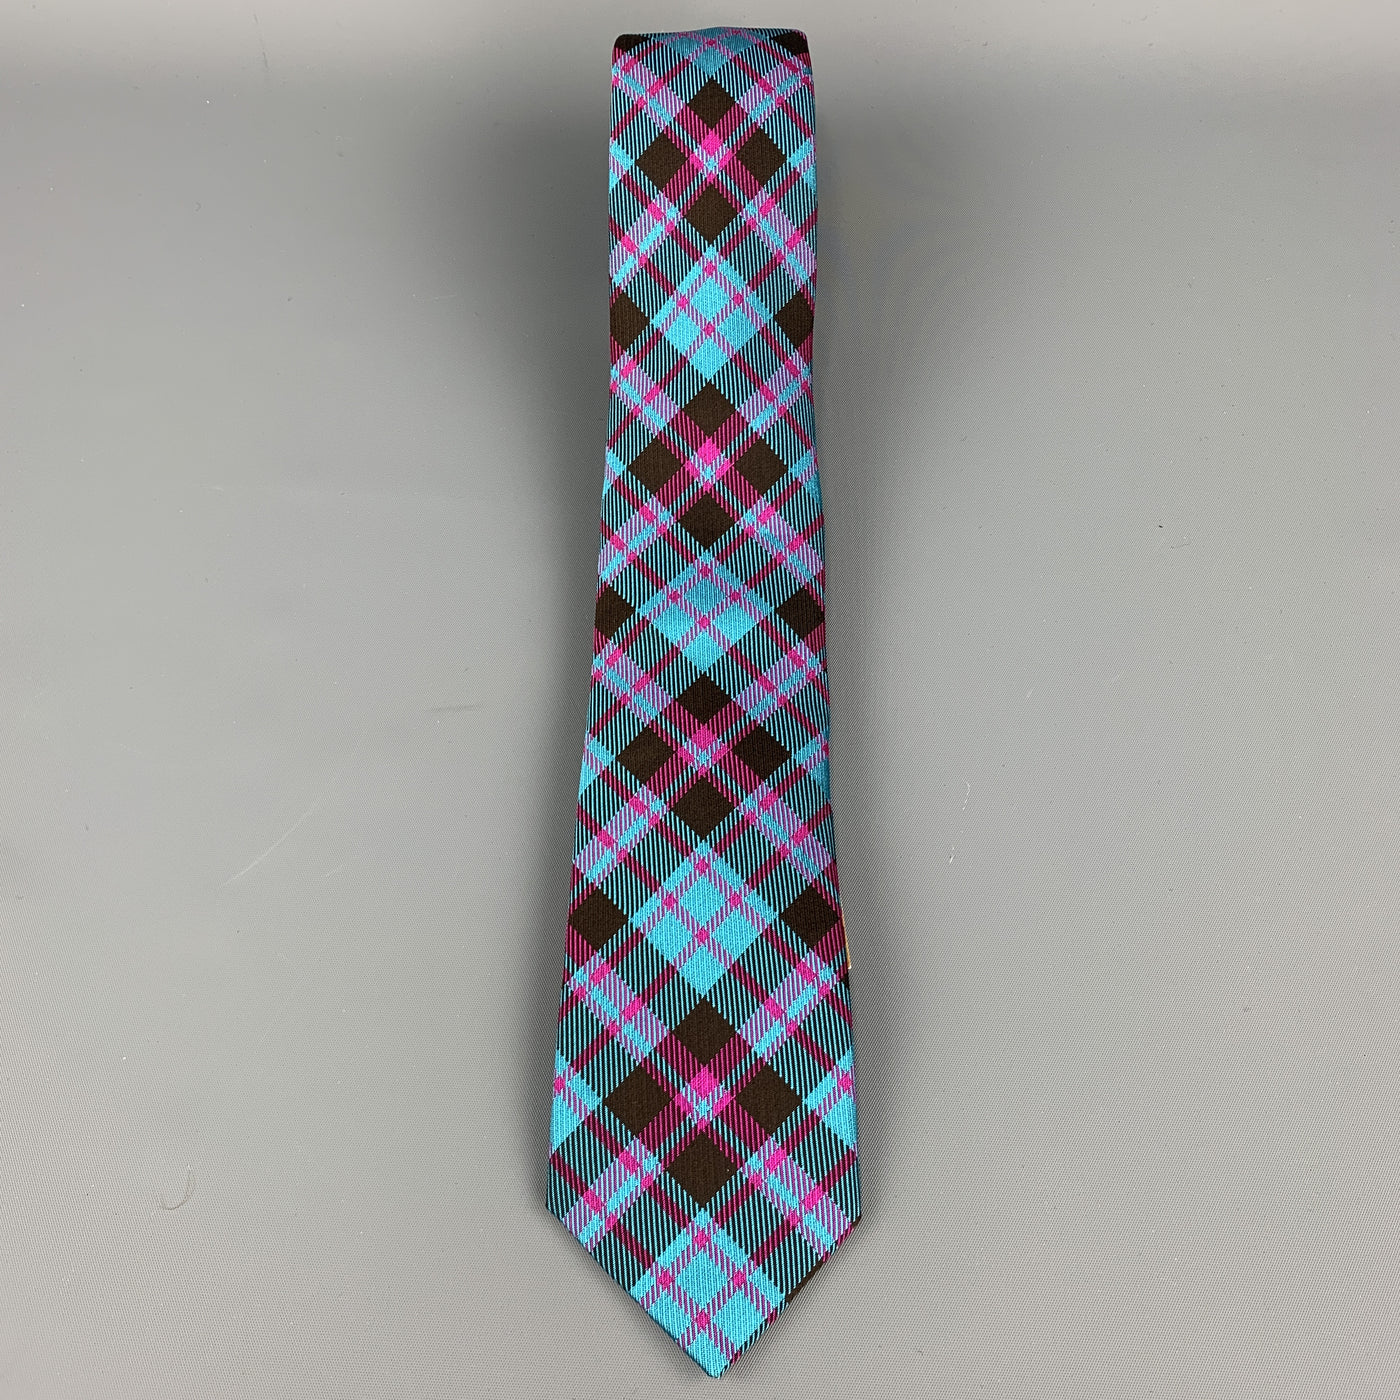 PHINEAS COLE Aqua Blue & Pink Plaid Silk Skinny Tie